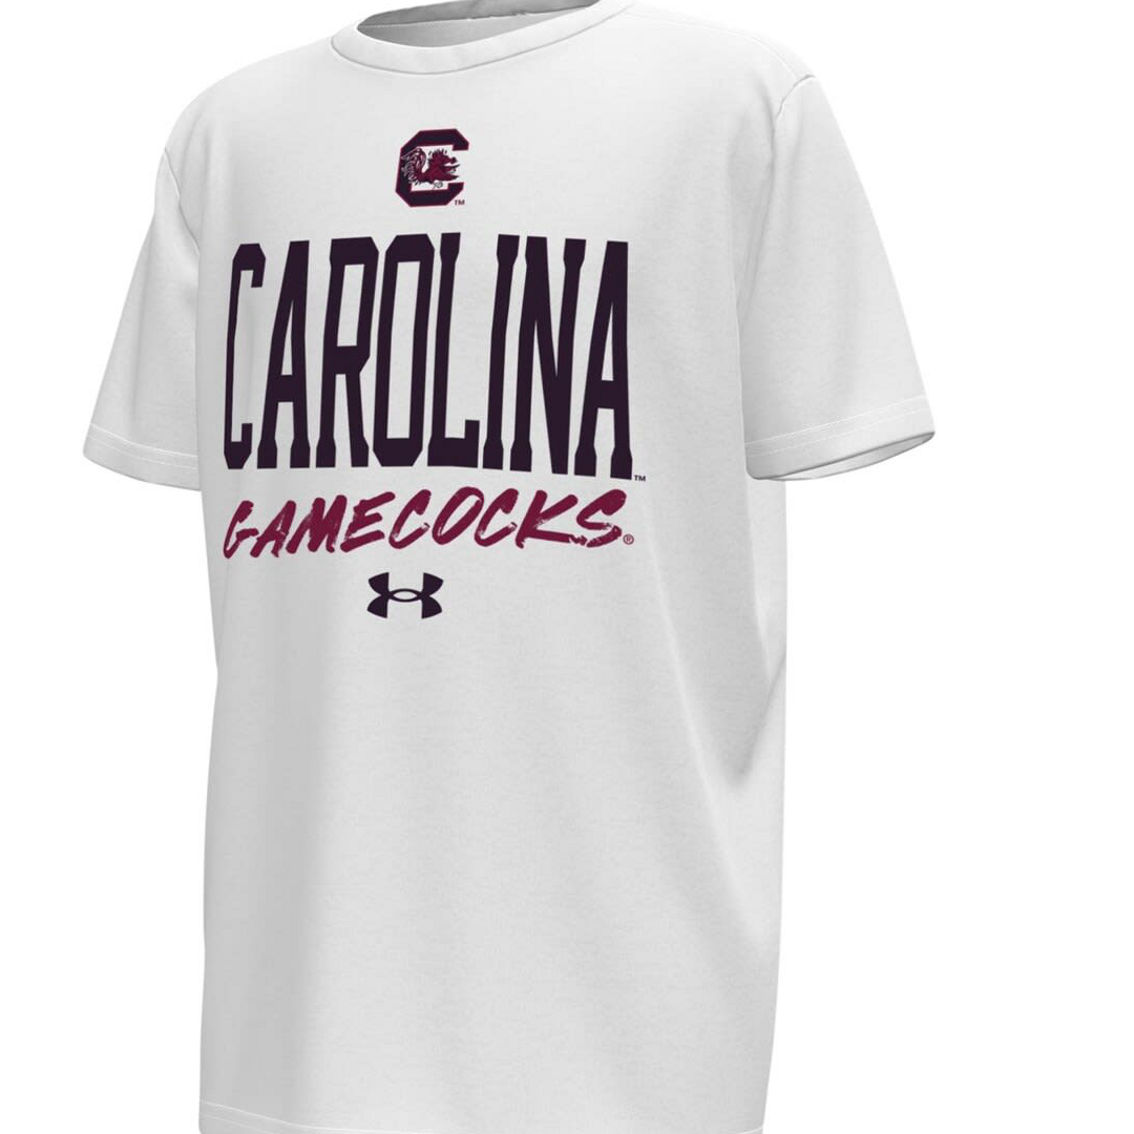 Under Armour Youth White/Garnet South Carolina Gamecocks Gameday T-Shirt - Image 3 of 4